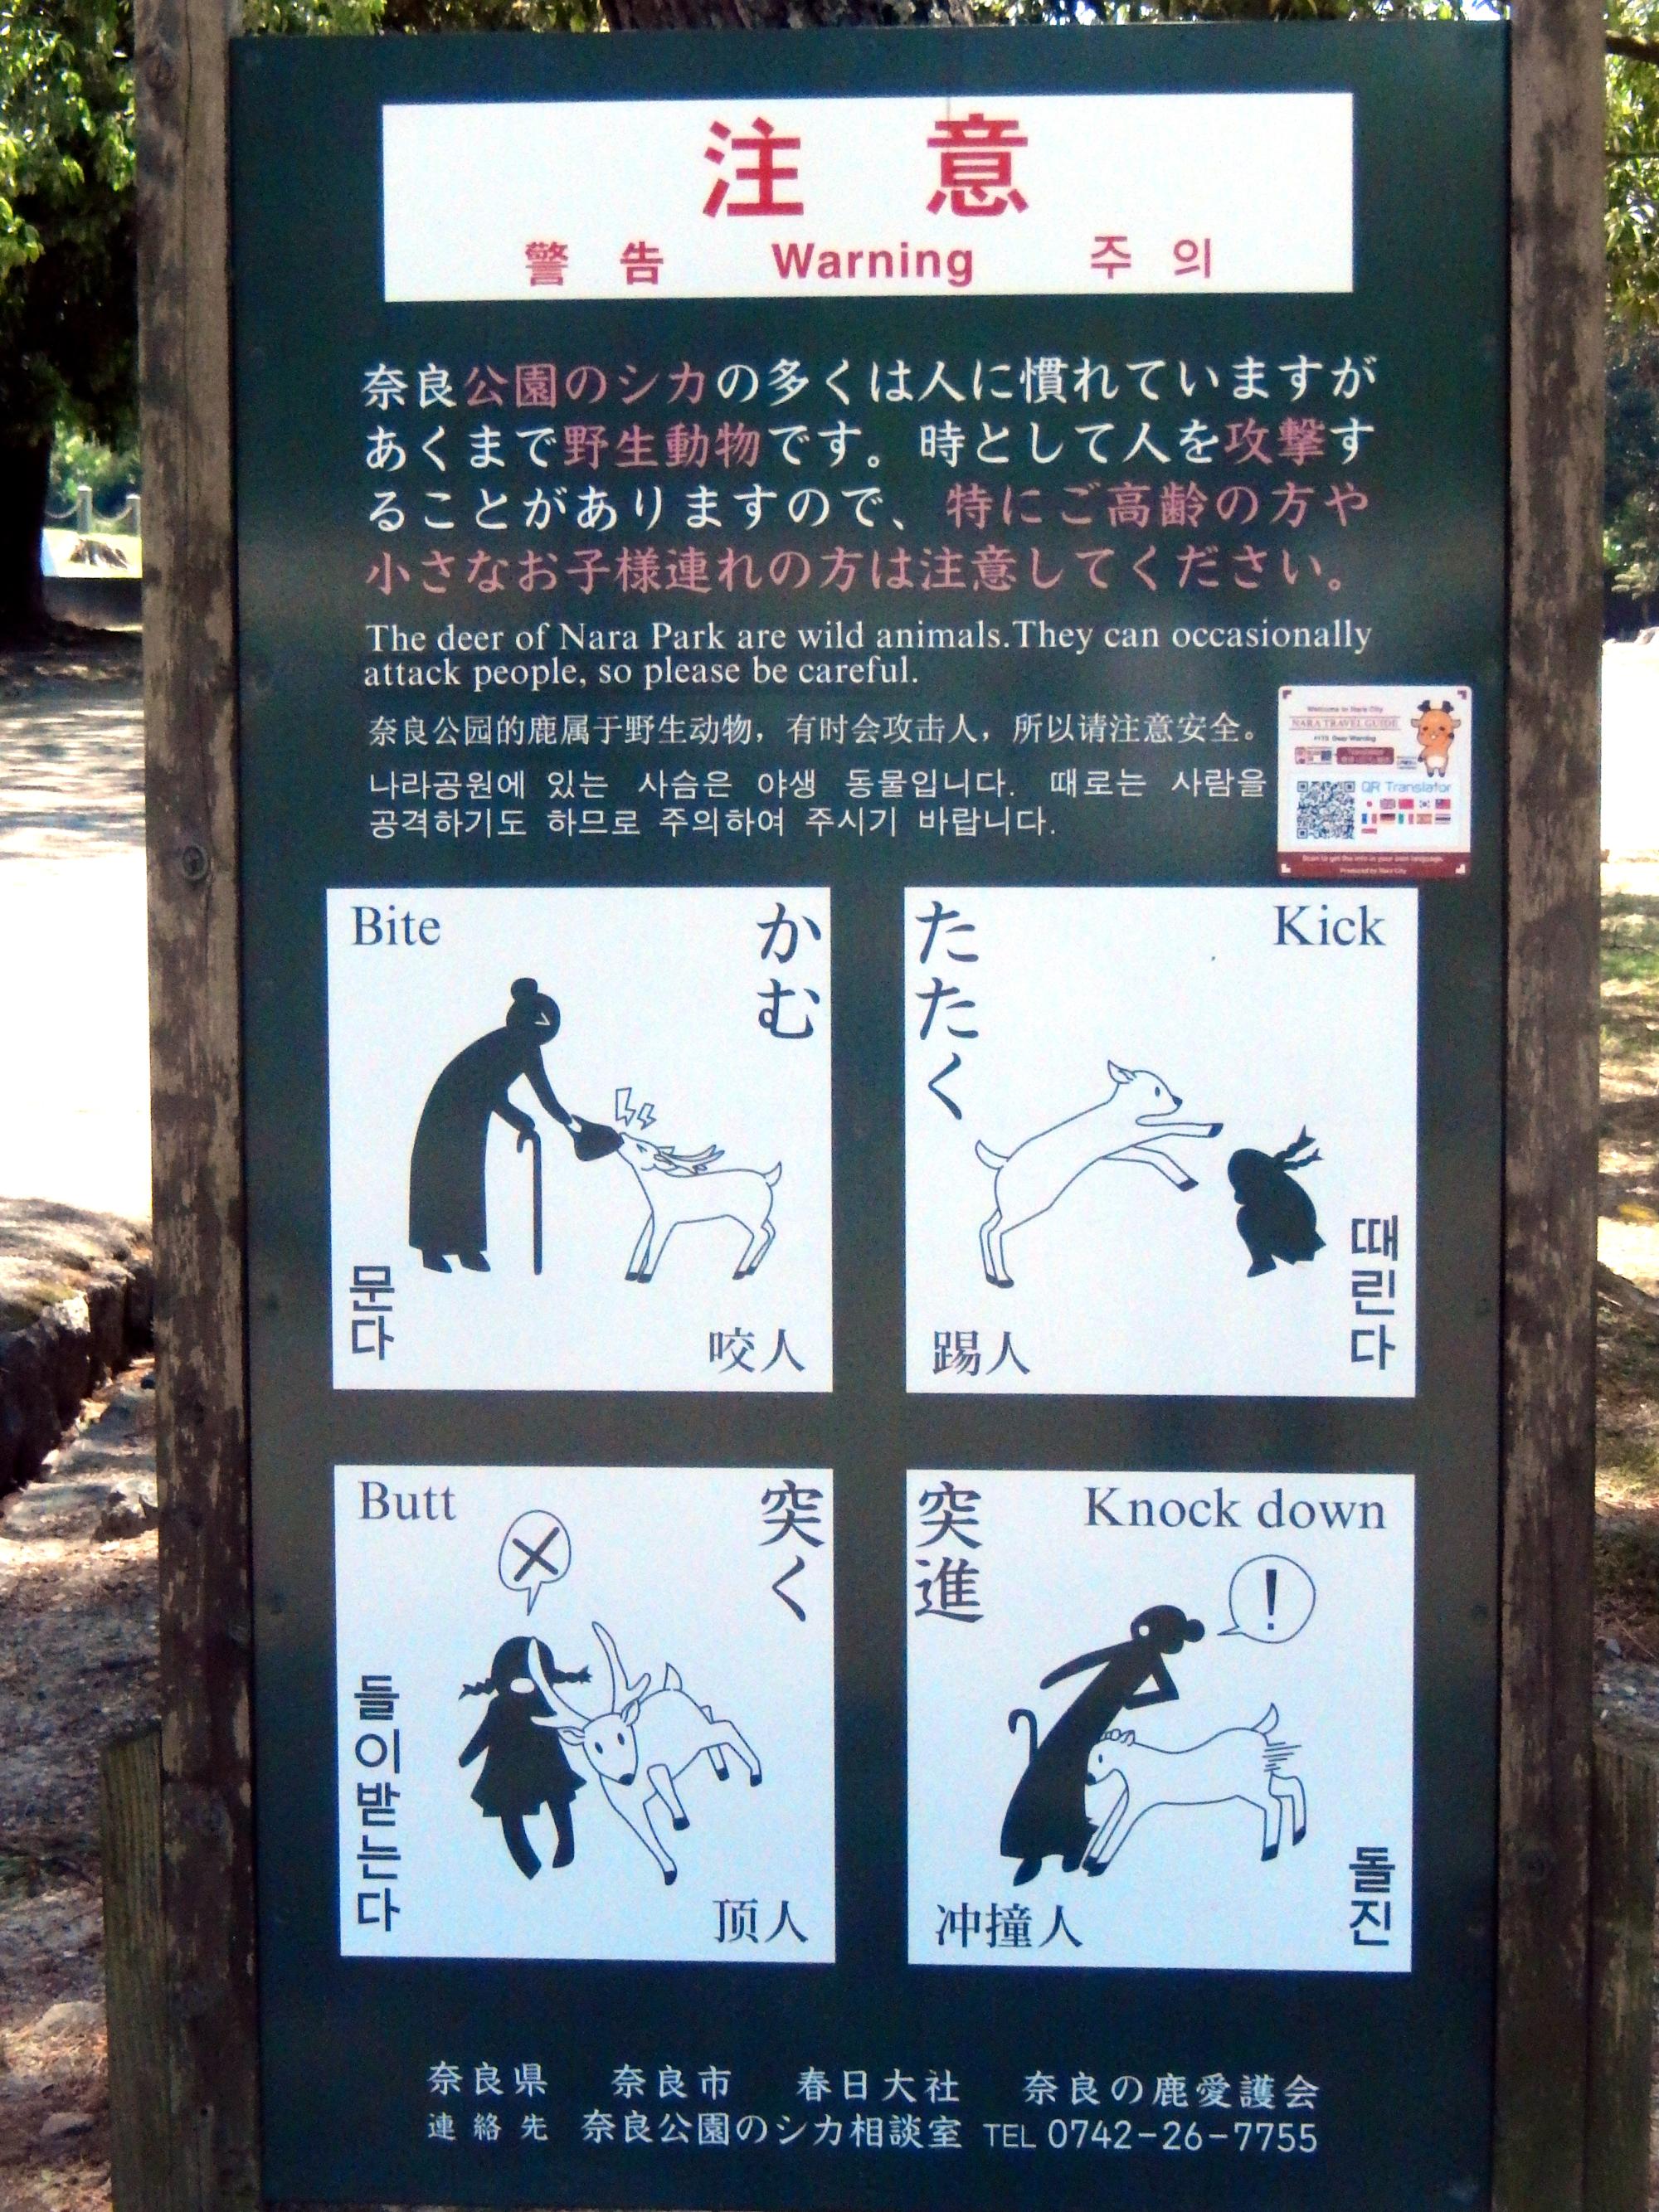 Kyoto Area - Nara Park Deer Advisory